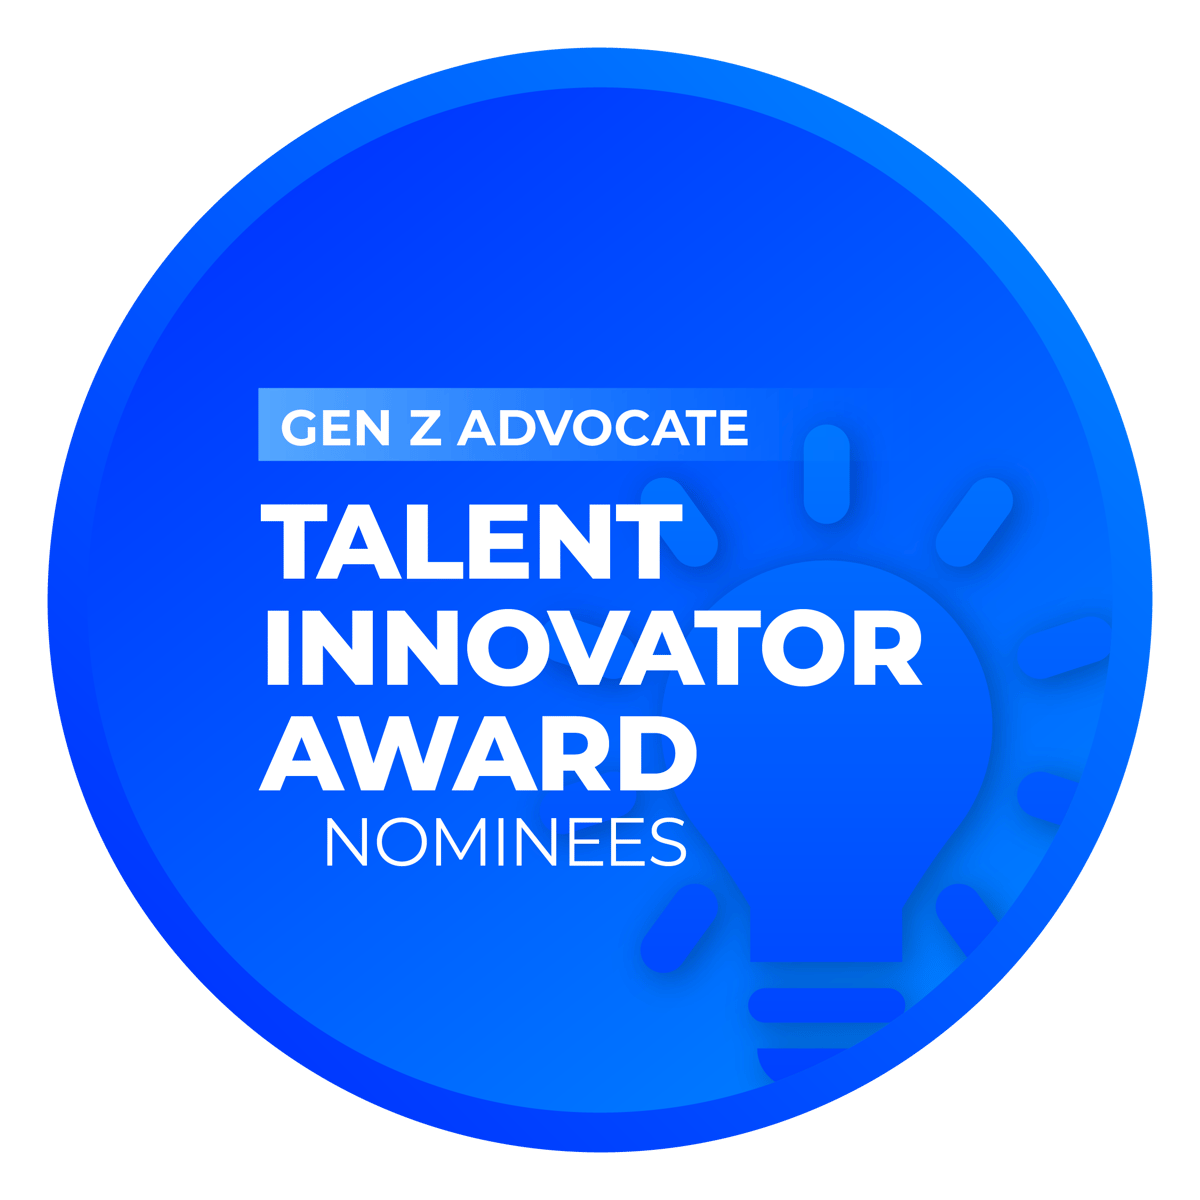 Talent Innovator Award: Gen Z Advocate Nominees